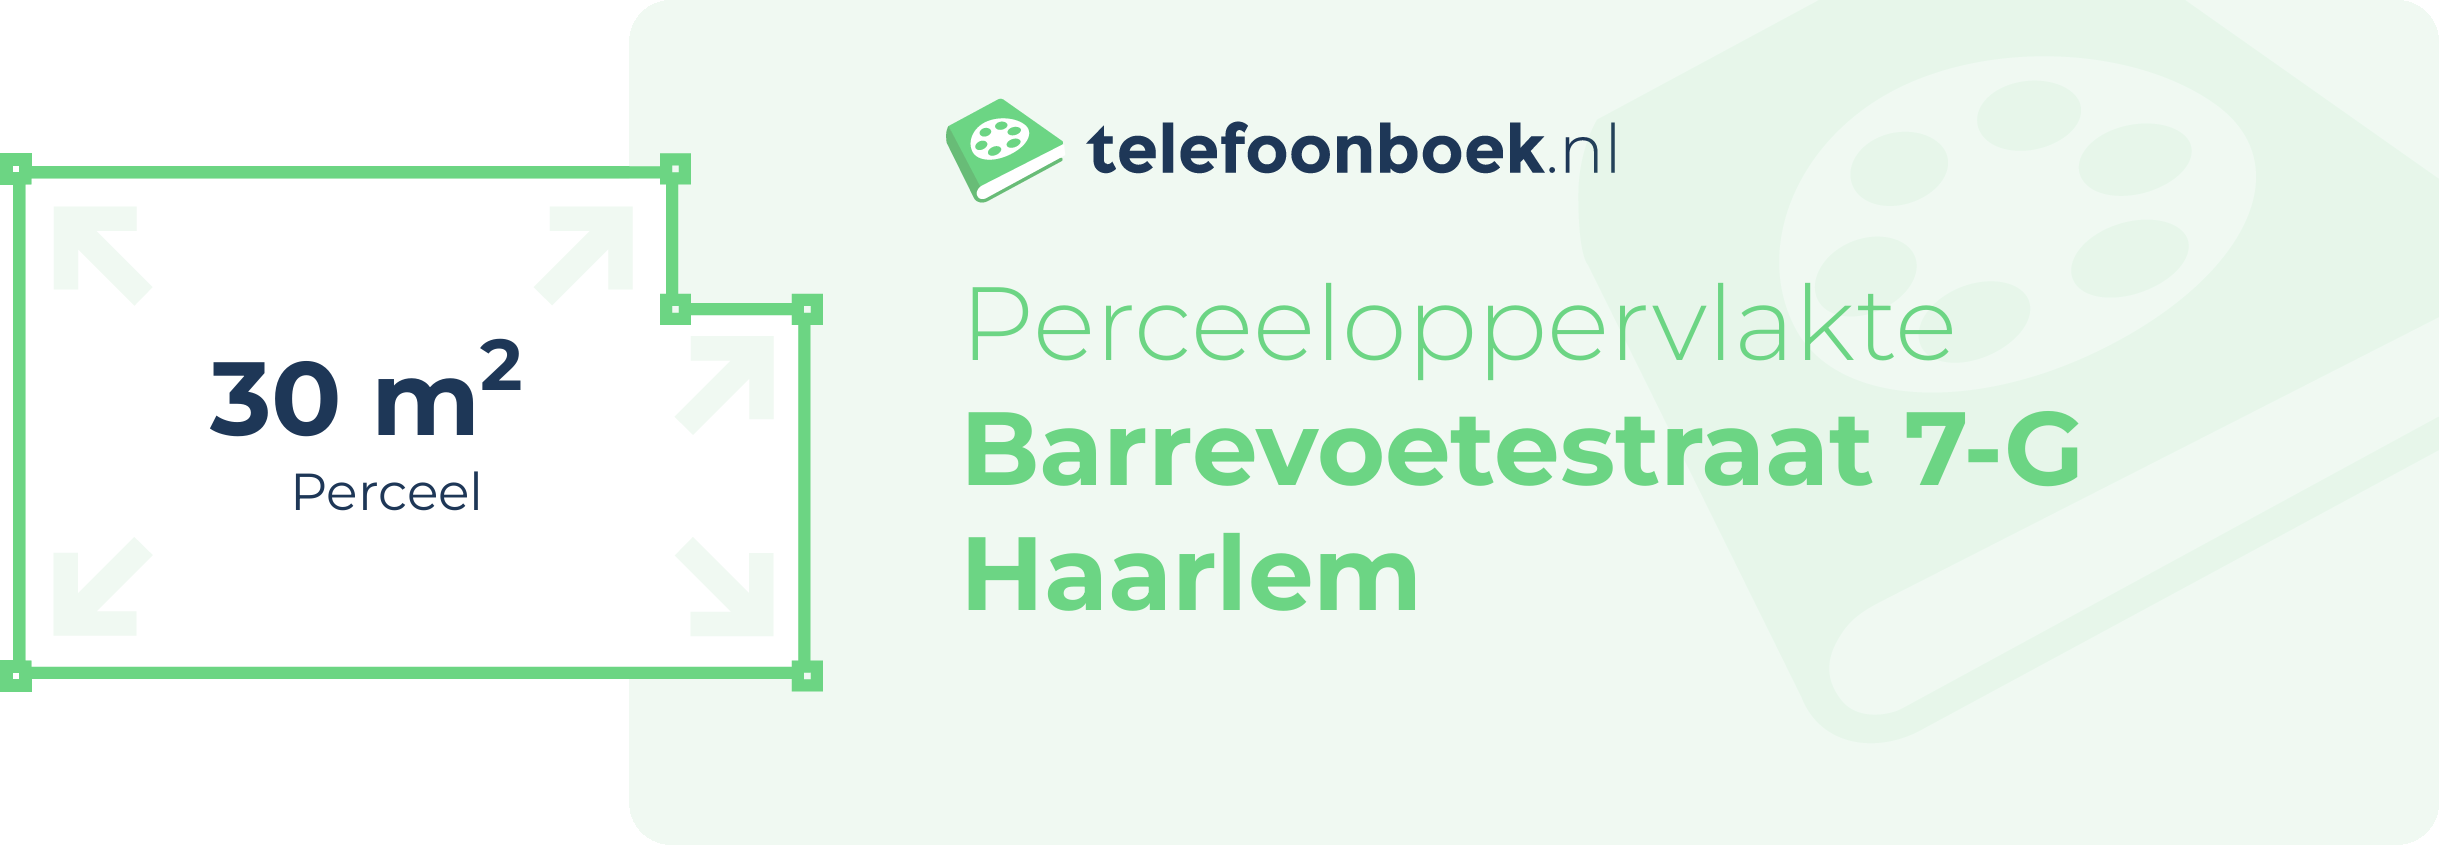 Perceeloppervlakte Barrevoetestraat 7-G Haarlem